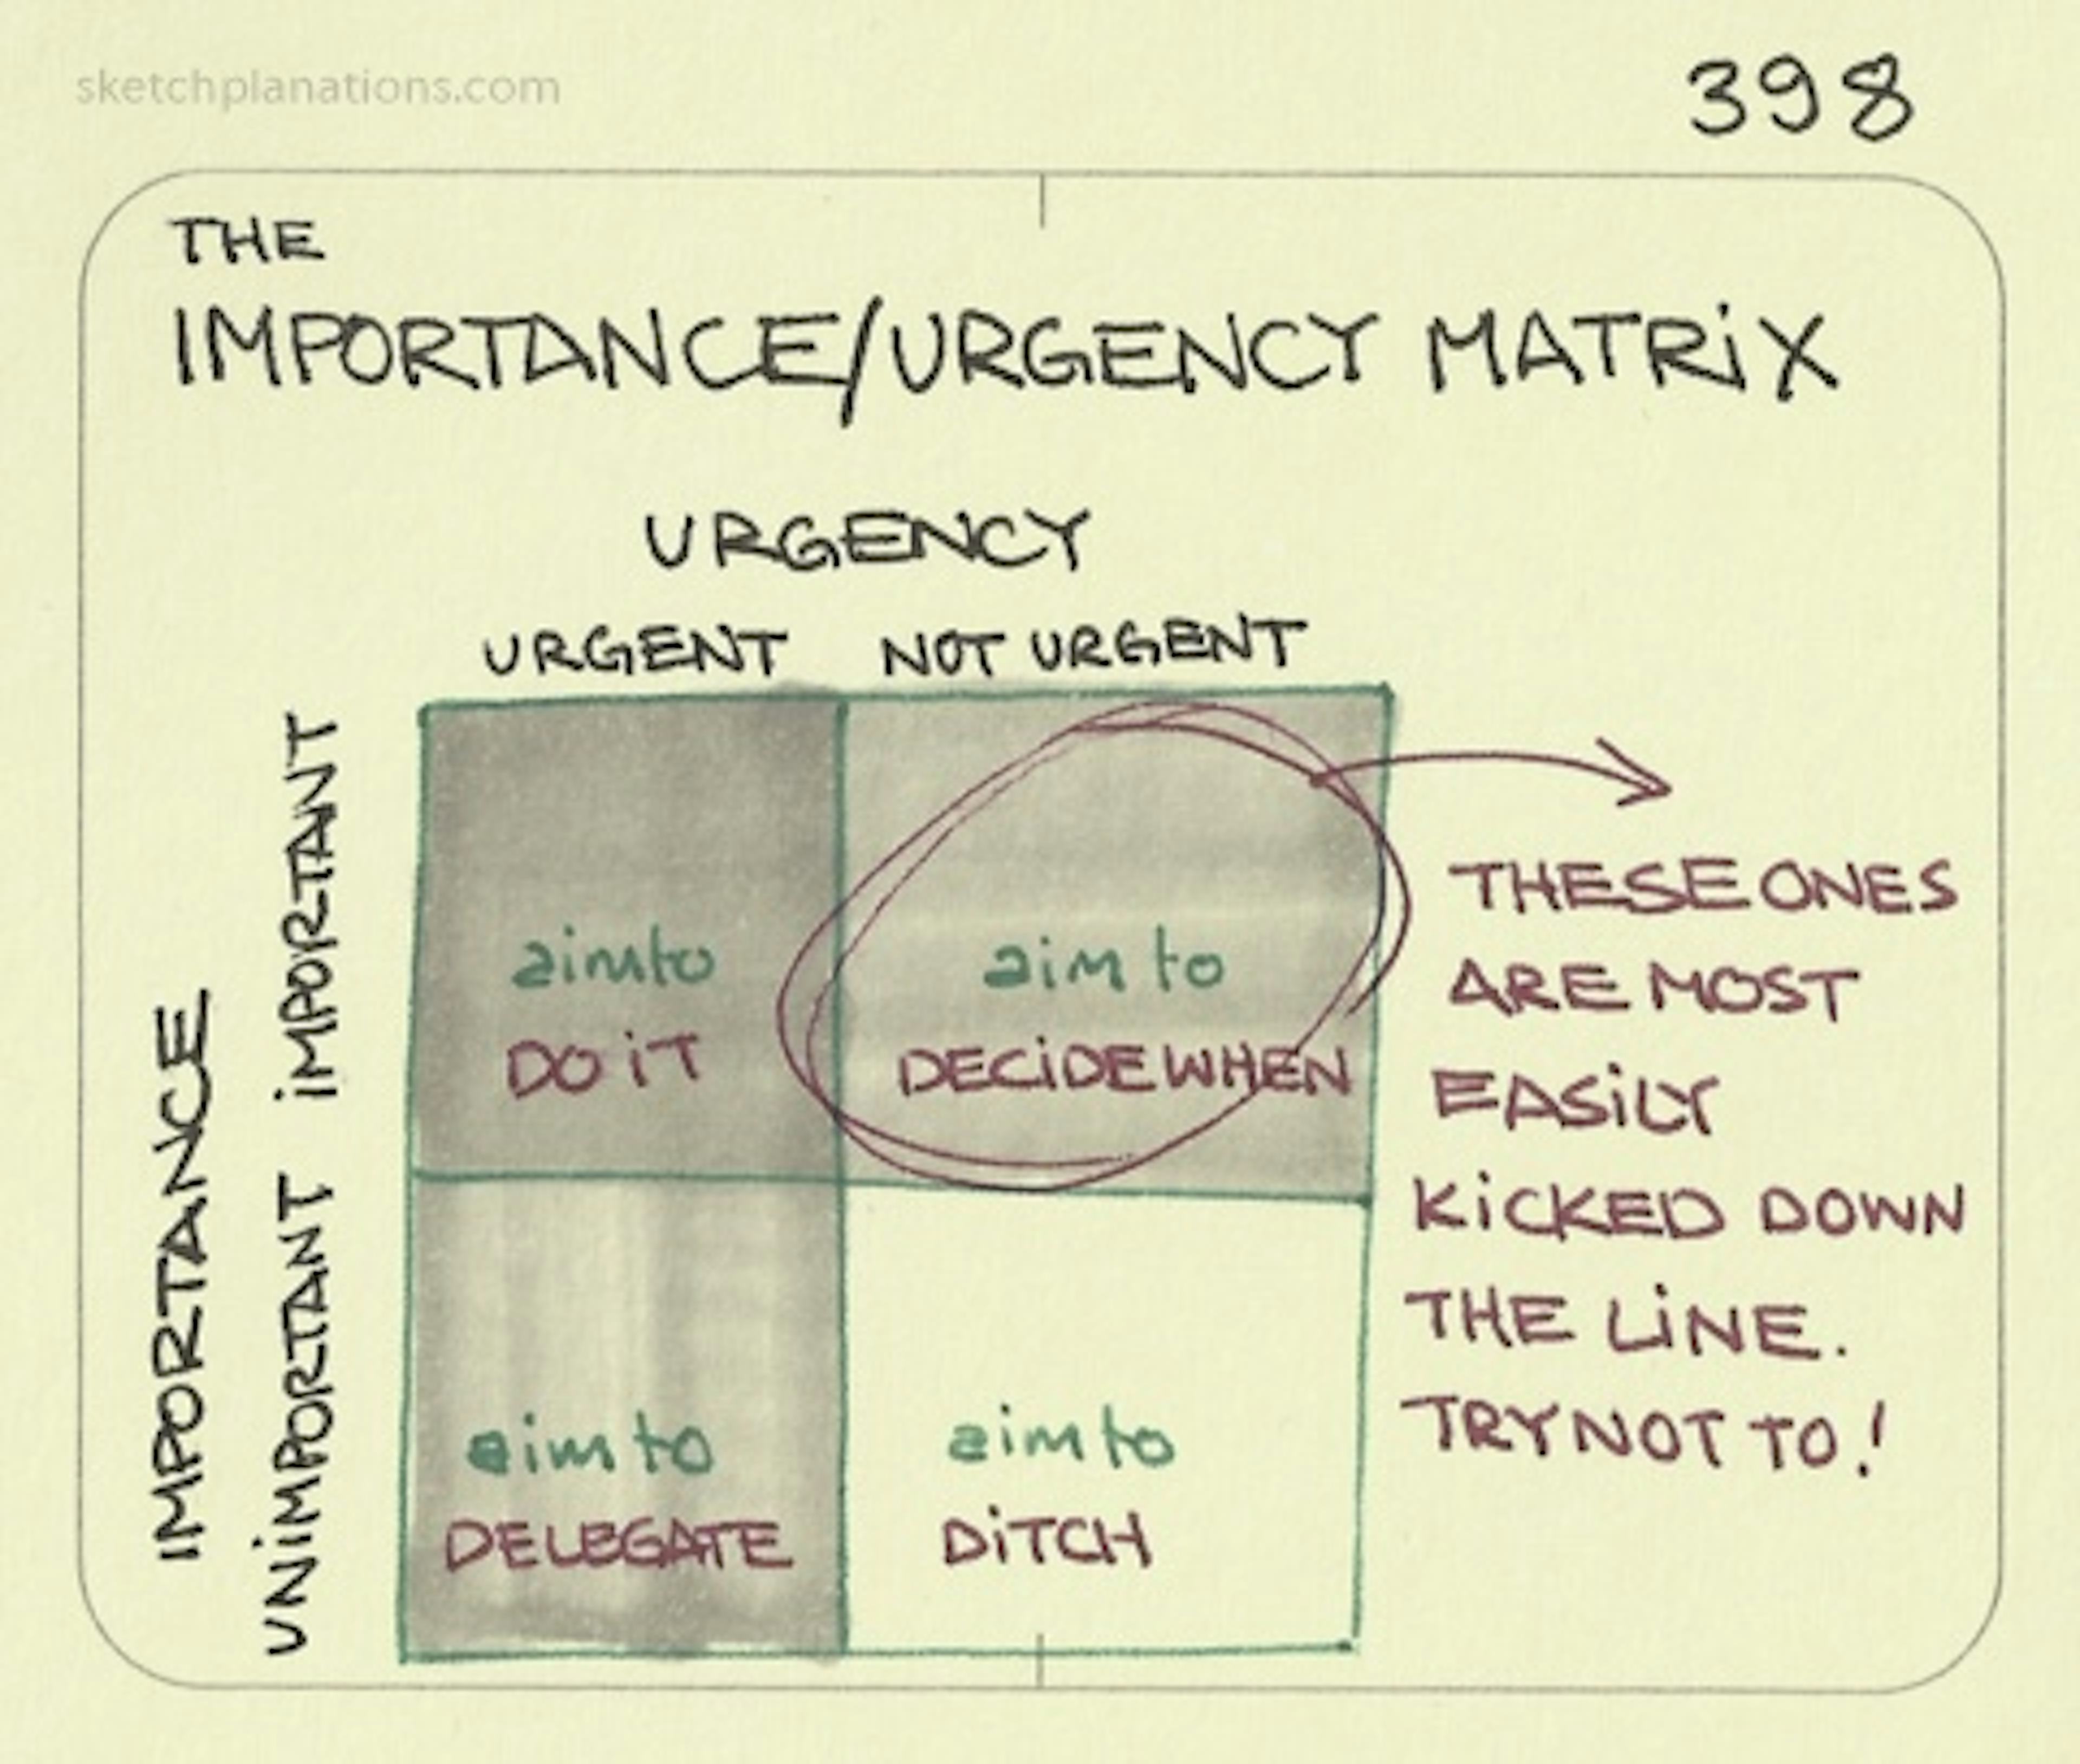 The importance/urgency matrix - Sketchplanations